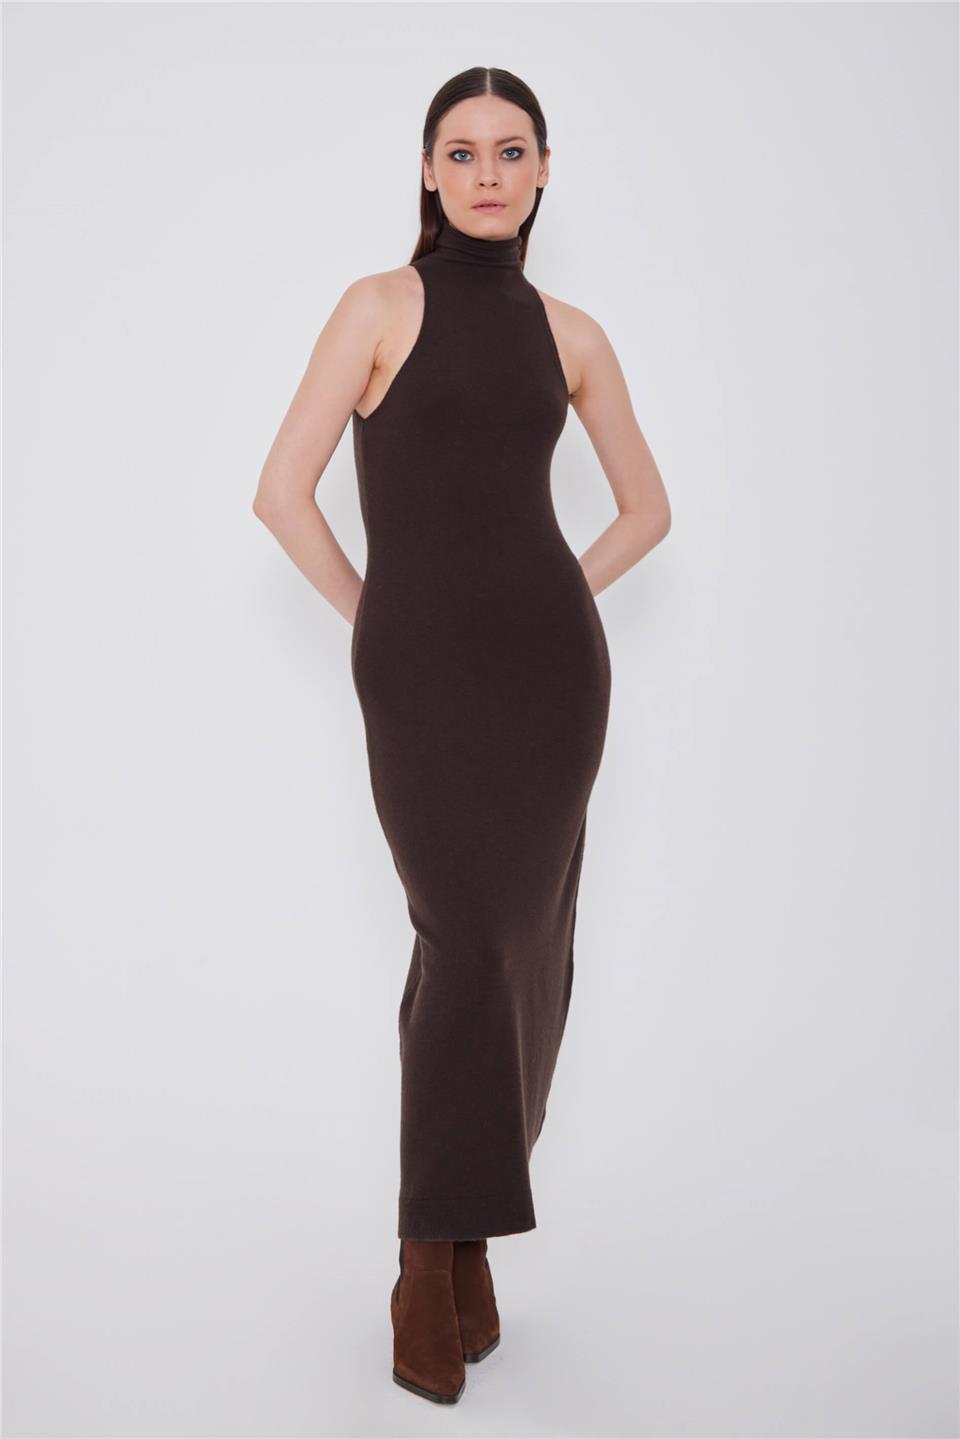 A model wears LFN10787 - Sleeveless Turtleneck Knıt Dress Deep Ink Black - Siyah, wholesale Dress of Lefon to display at Lonca